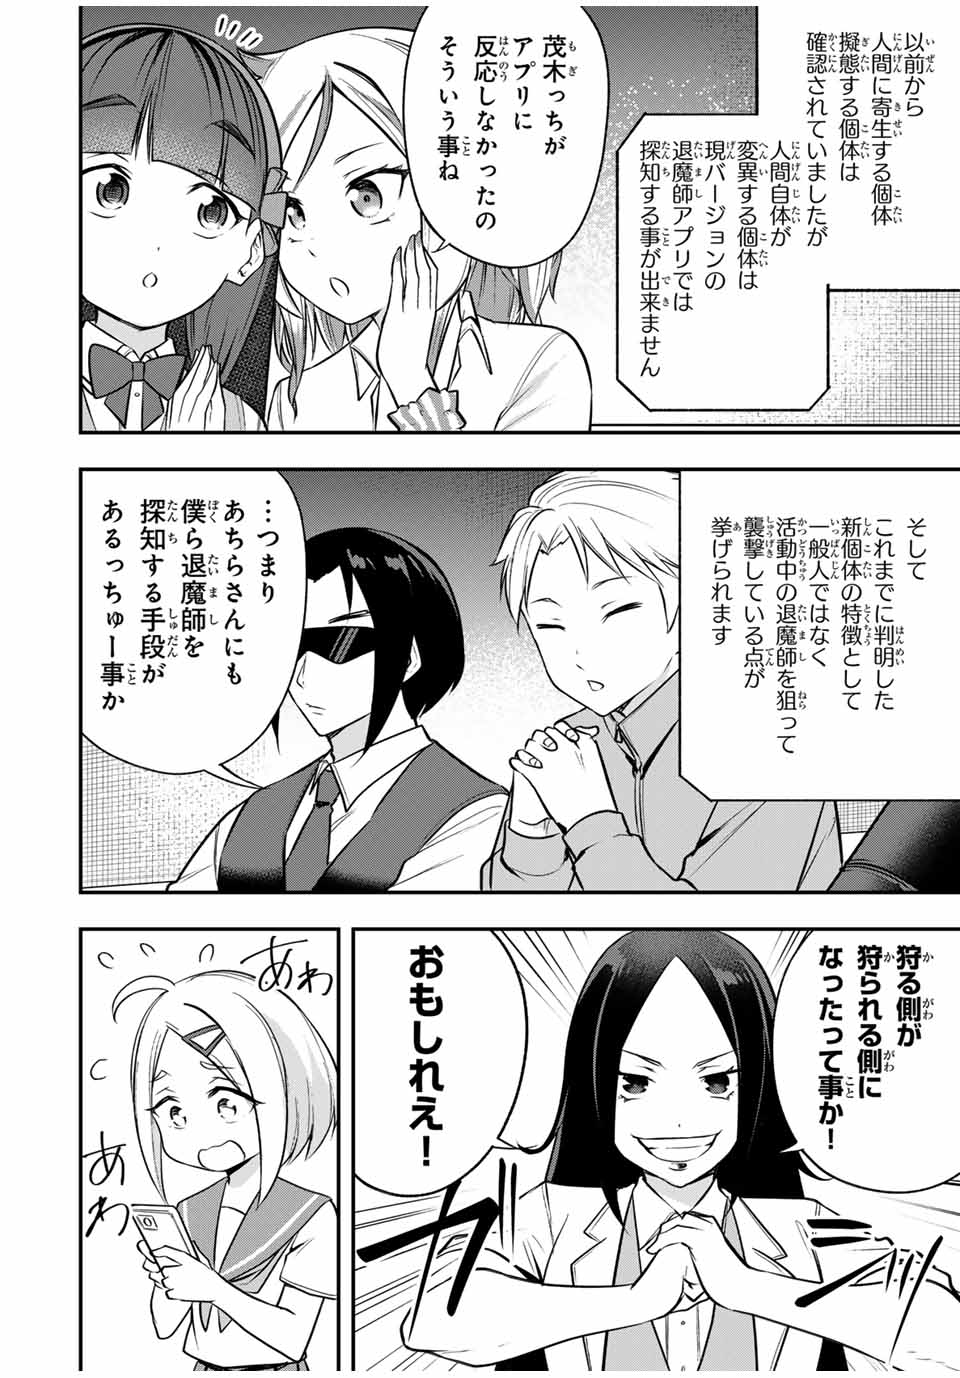 Heroine wa xx Okasegitai - Chapter 12 - Page 14